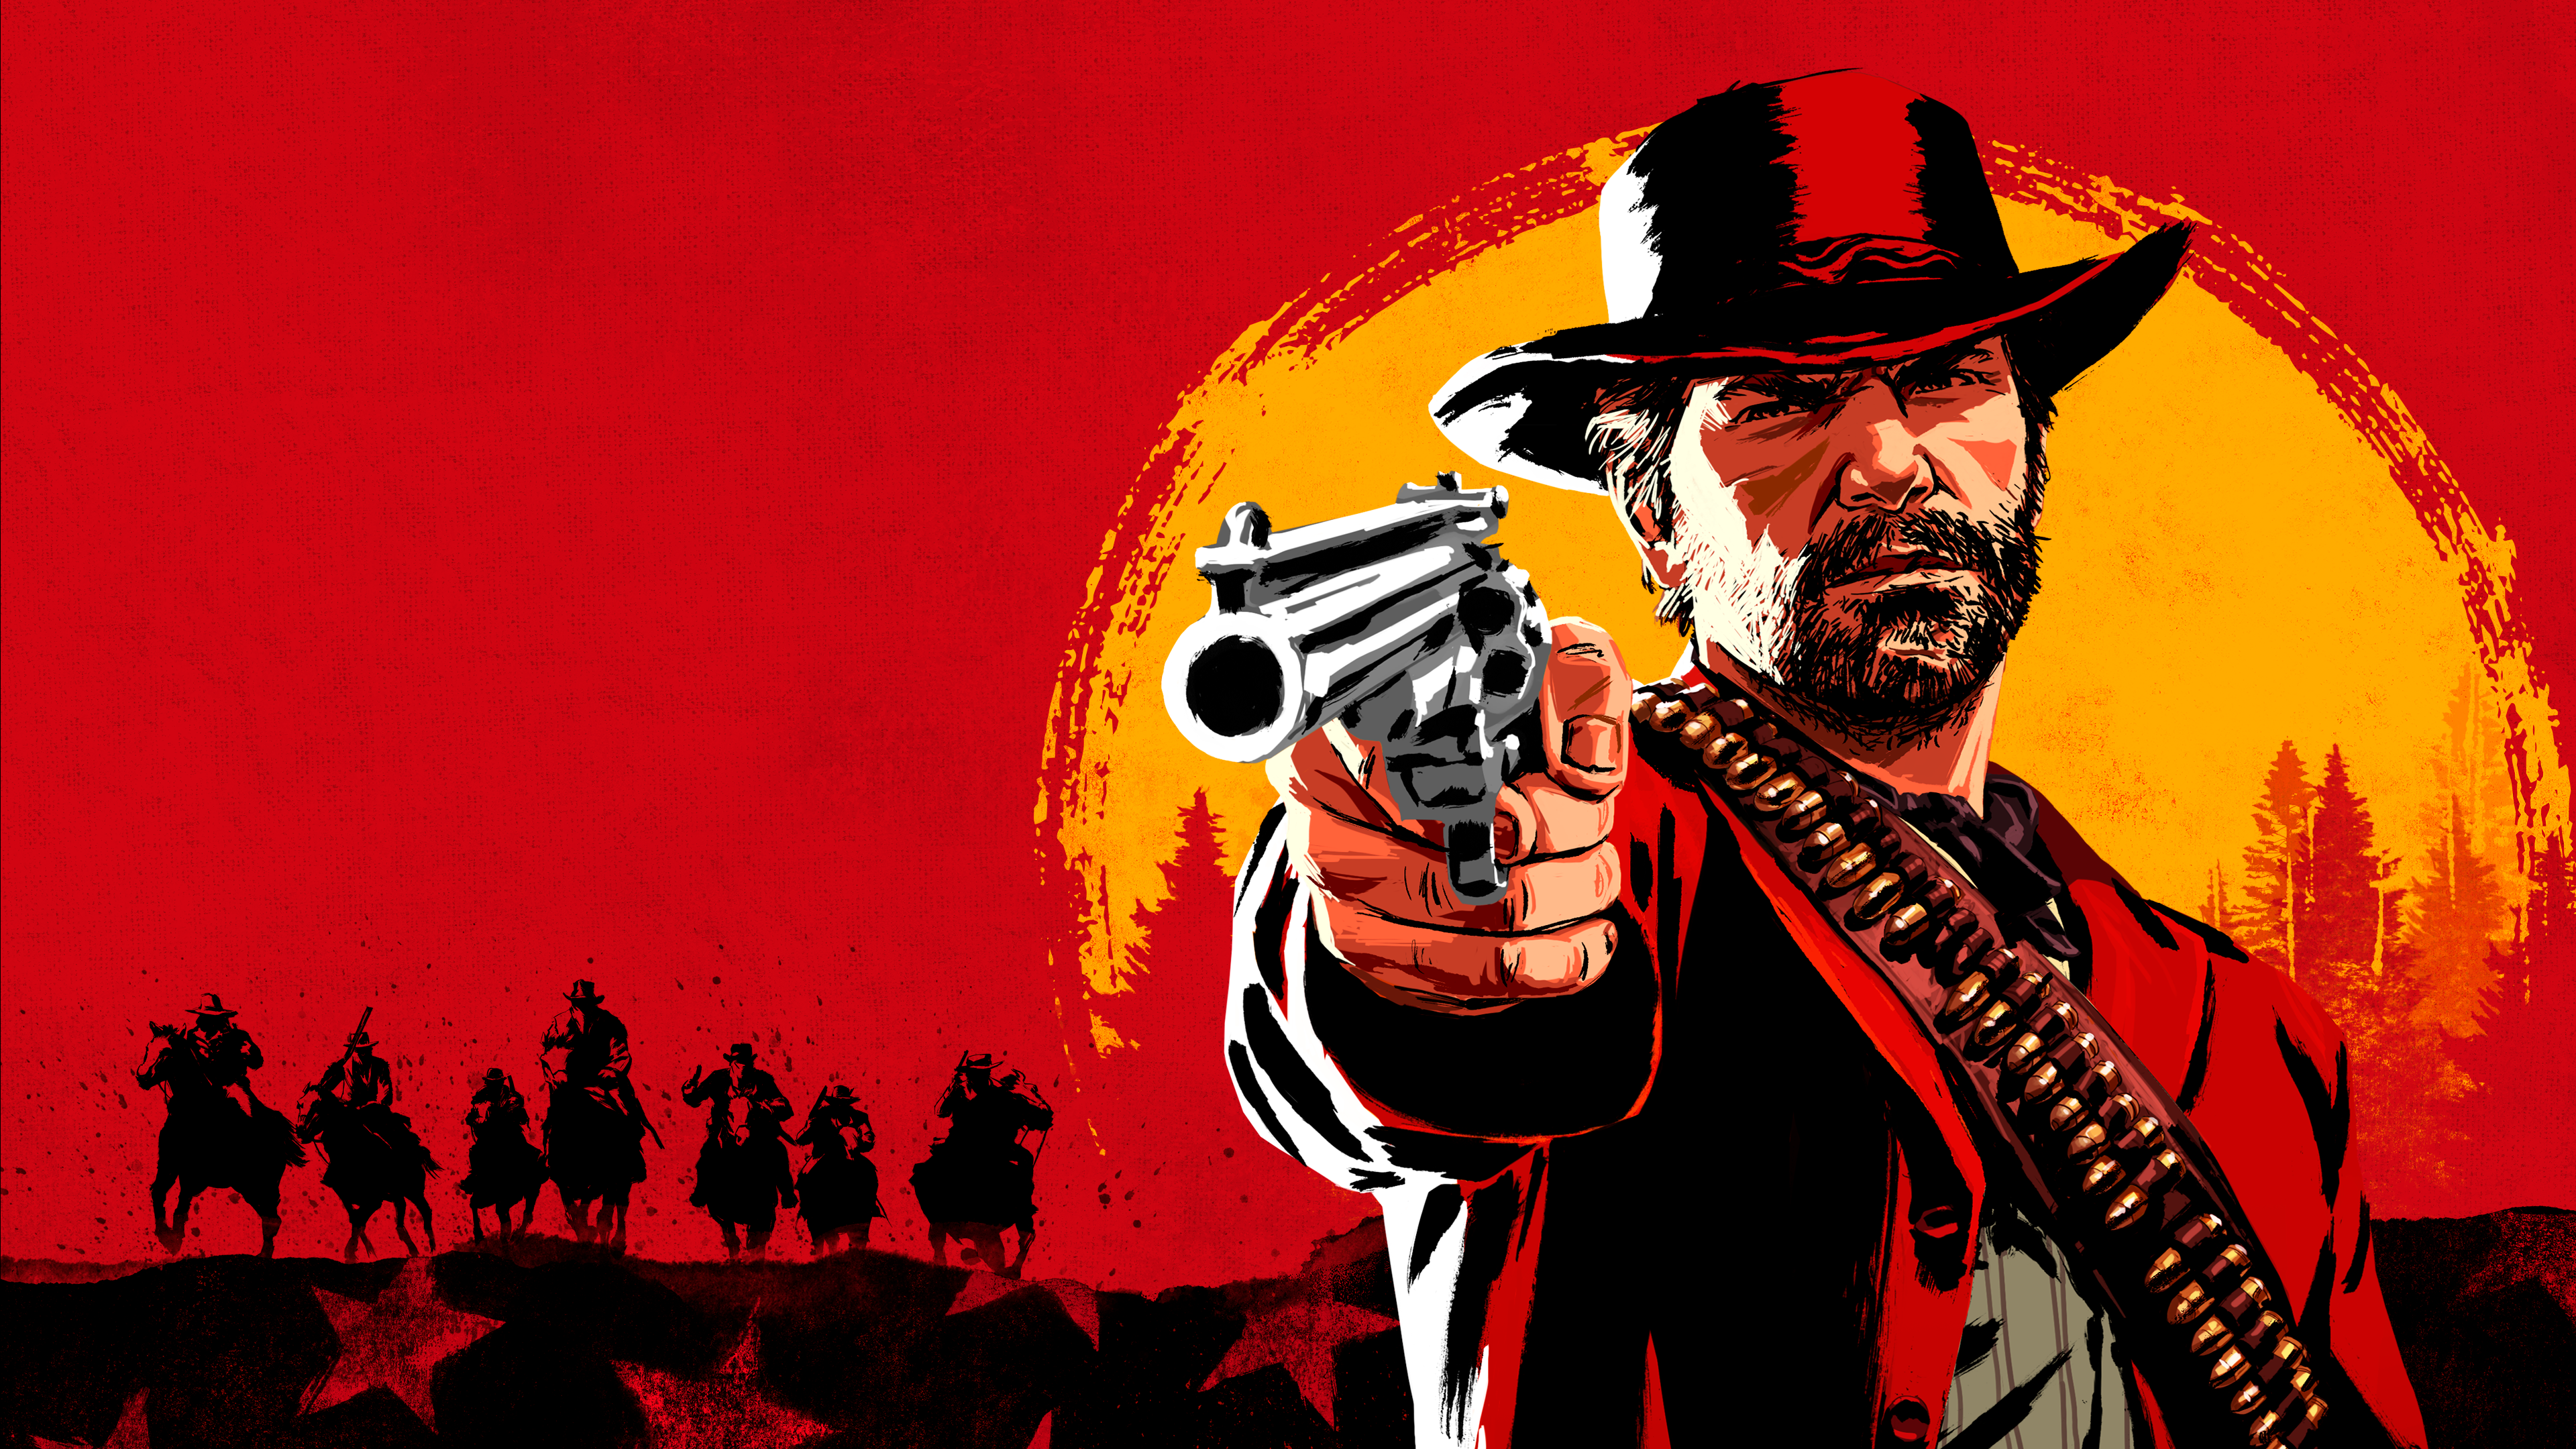 Digital Art Artwork Red Dead Redemption Red Dead Redemption 2 Arthur Morgan Video Games Video Game A 3840x2160